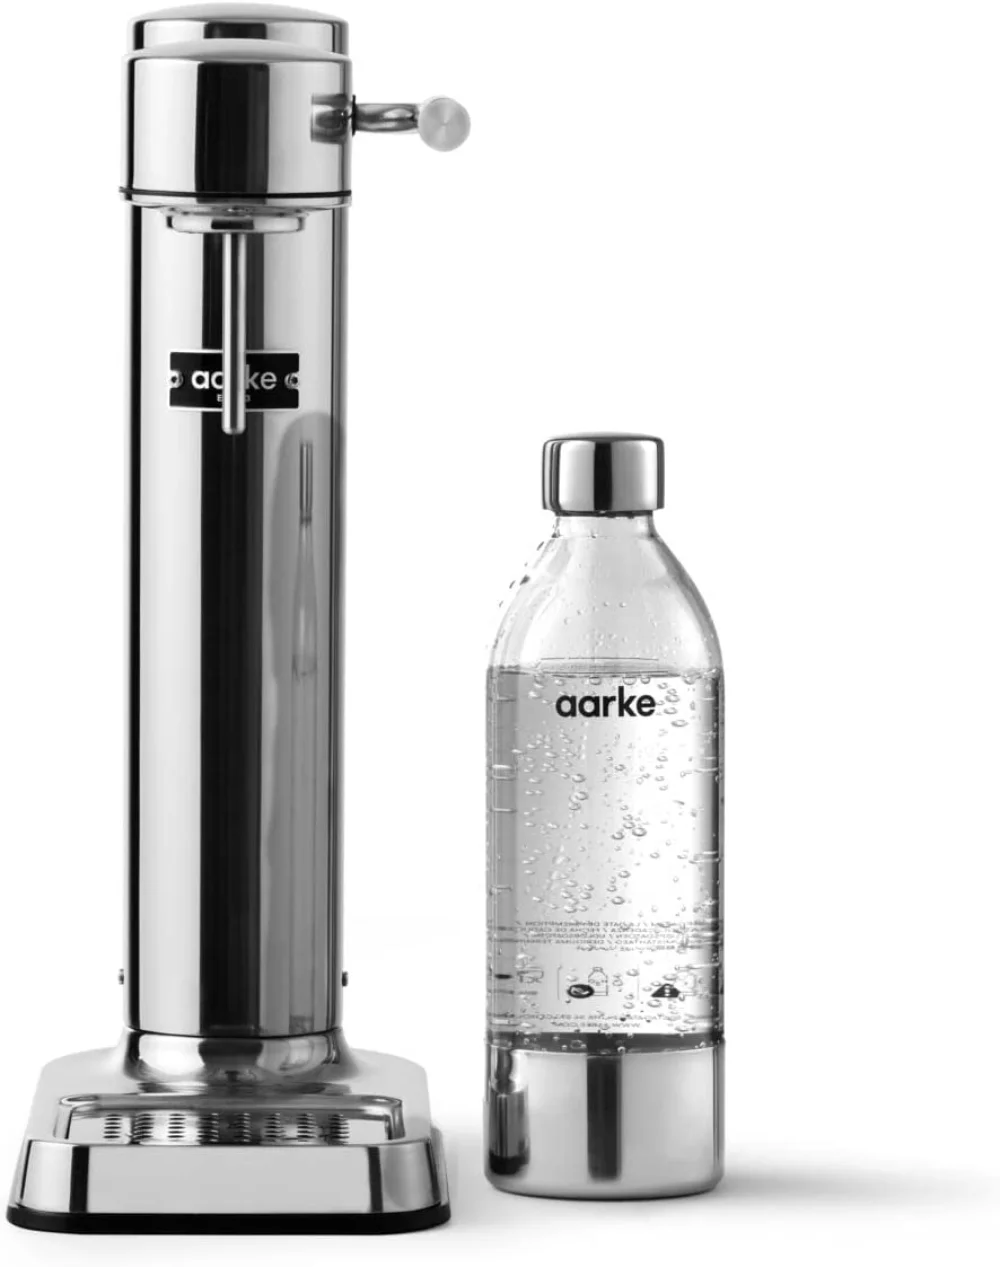 

aarke - Carbonator III Premium Carbonator-Sparkling & Seltzer Water Maker-Soda Maker with PET Bottle (Stainless Steel)